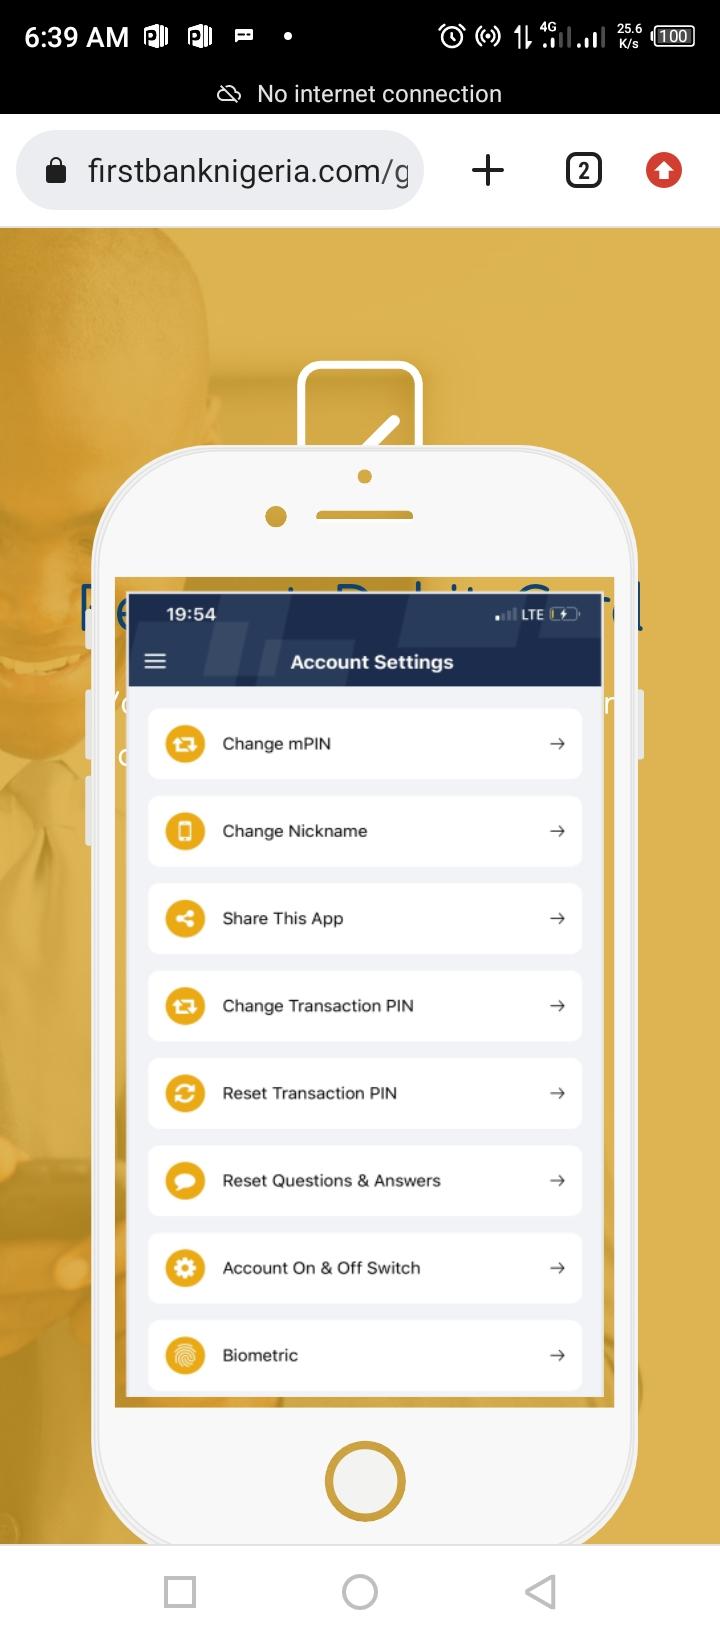 firstbank mobile app 2